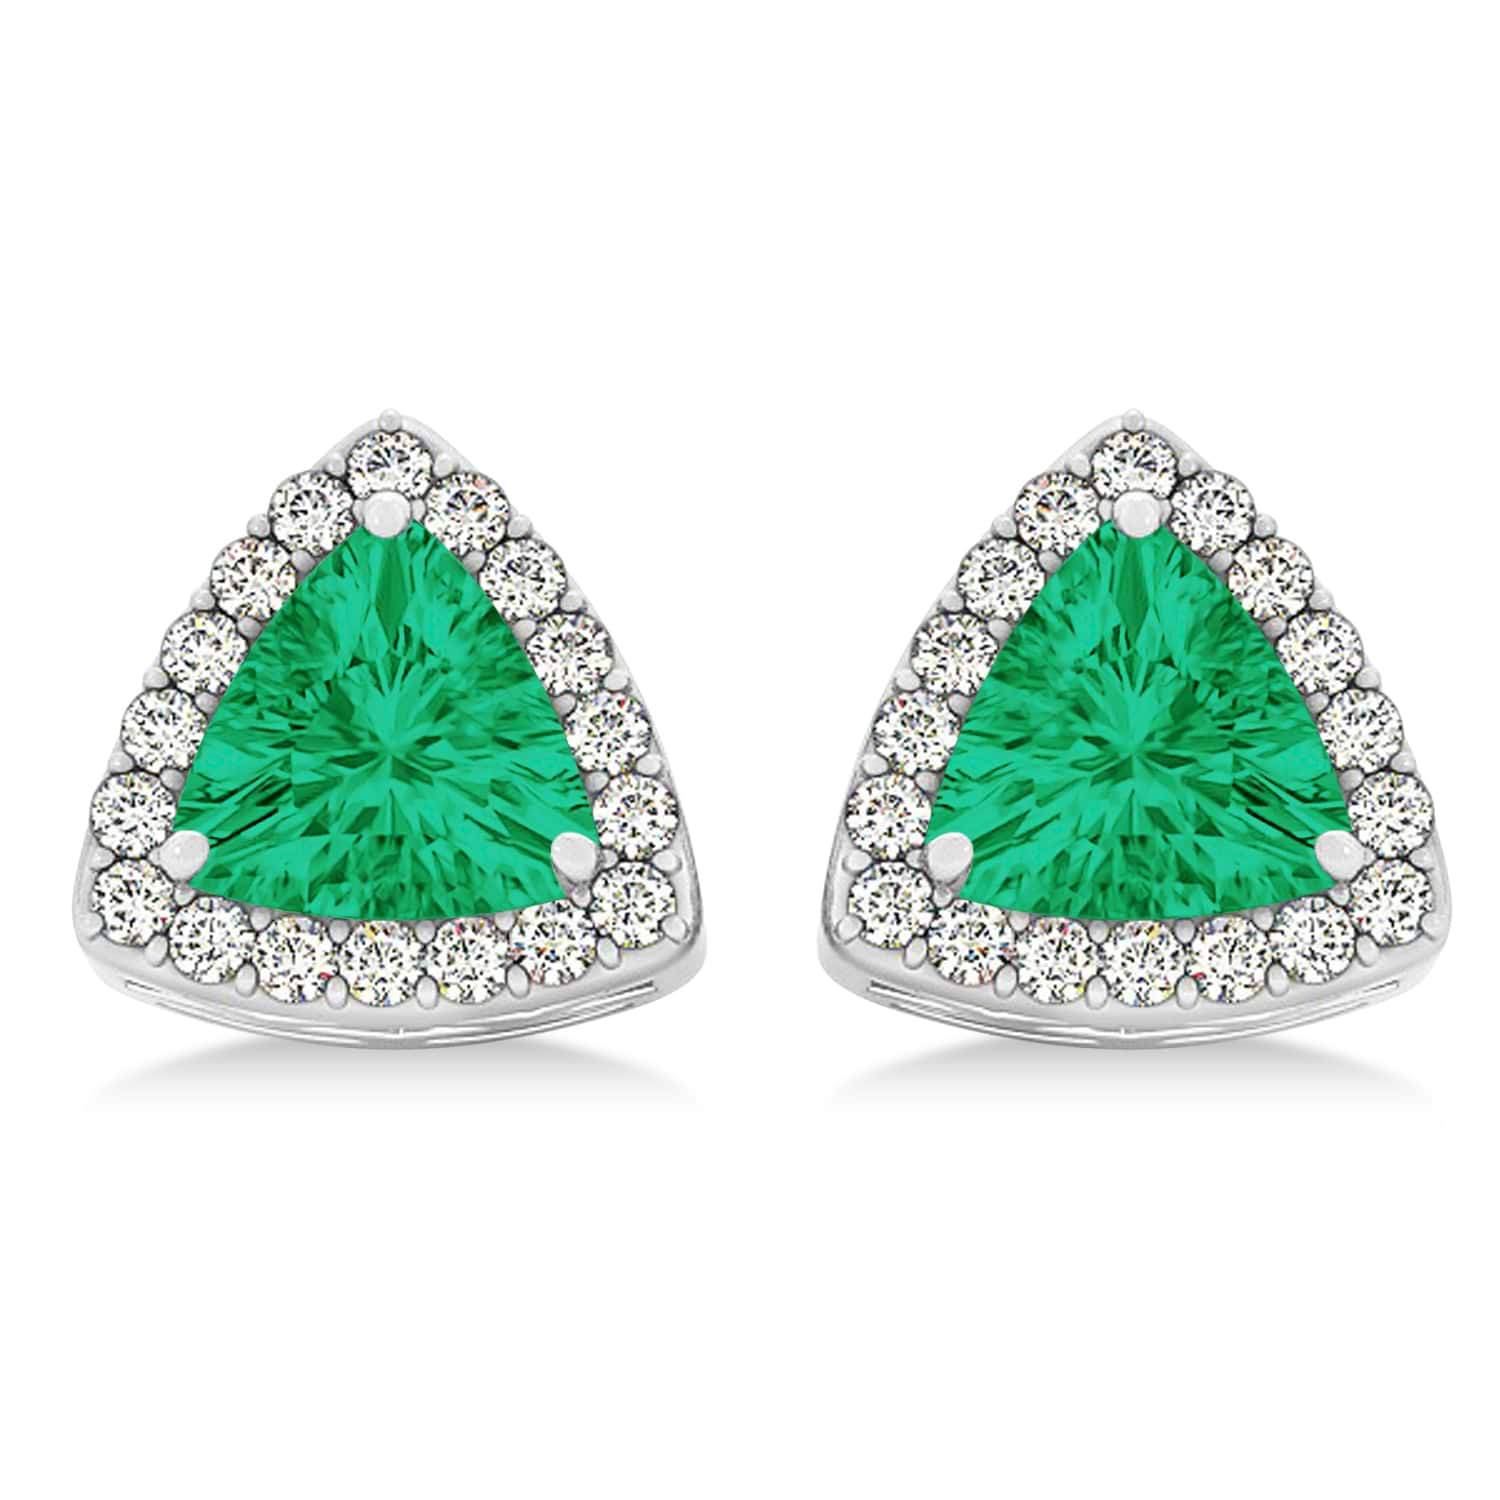 Trilliant Cut Emerald & Diamond Halo Earrings 14k White Gold (0.93ct)